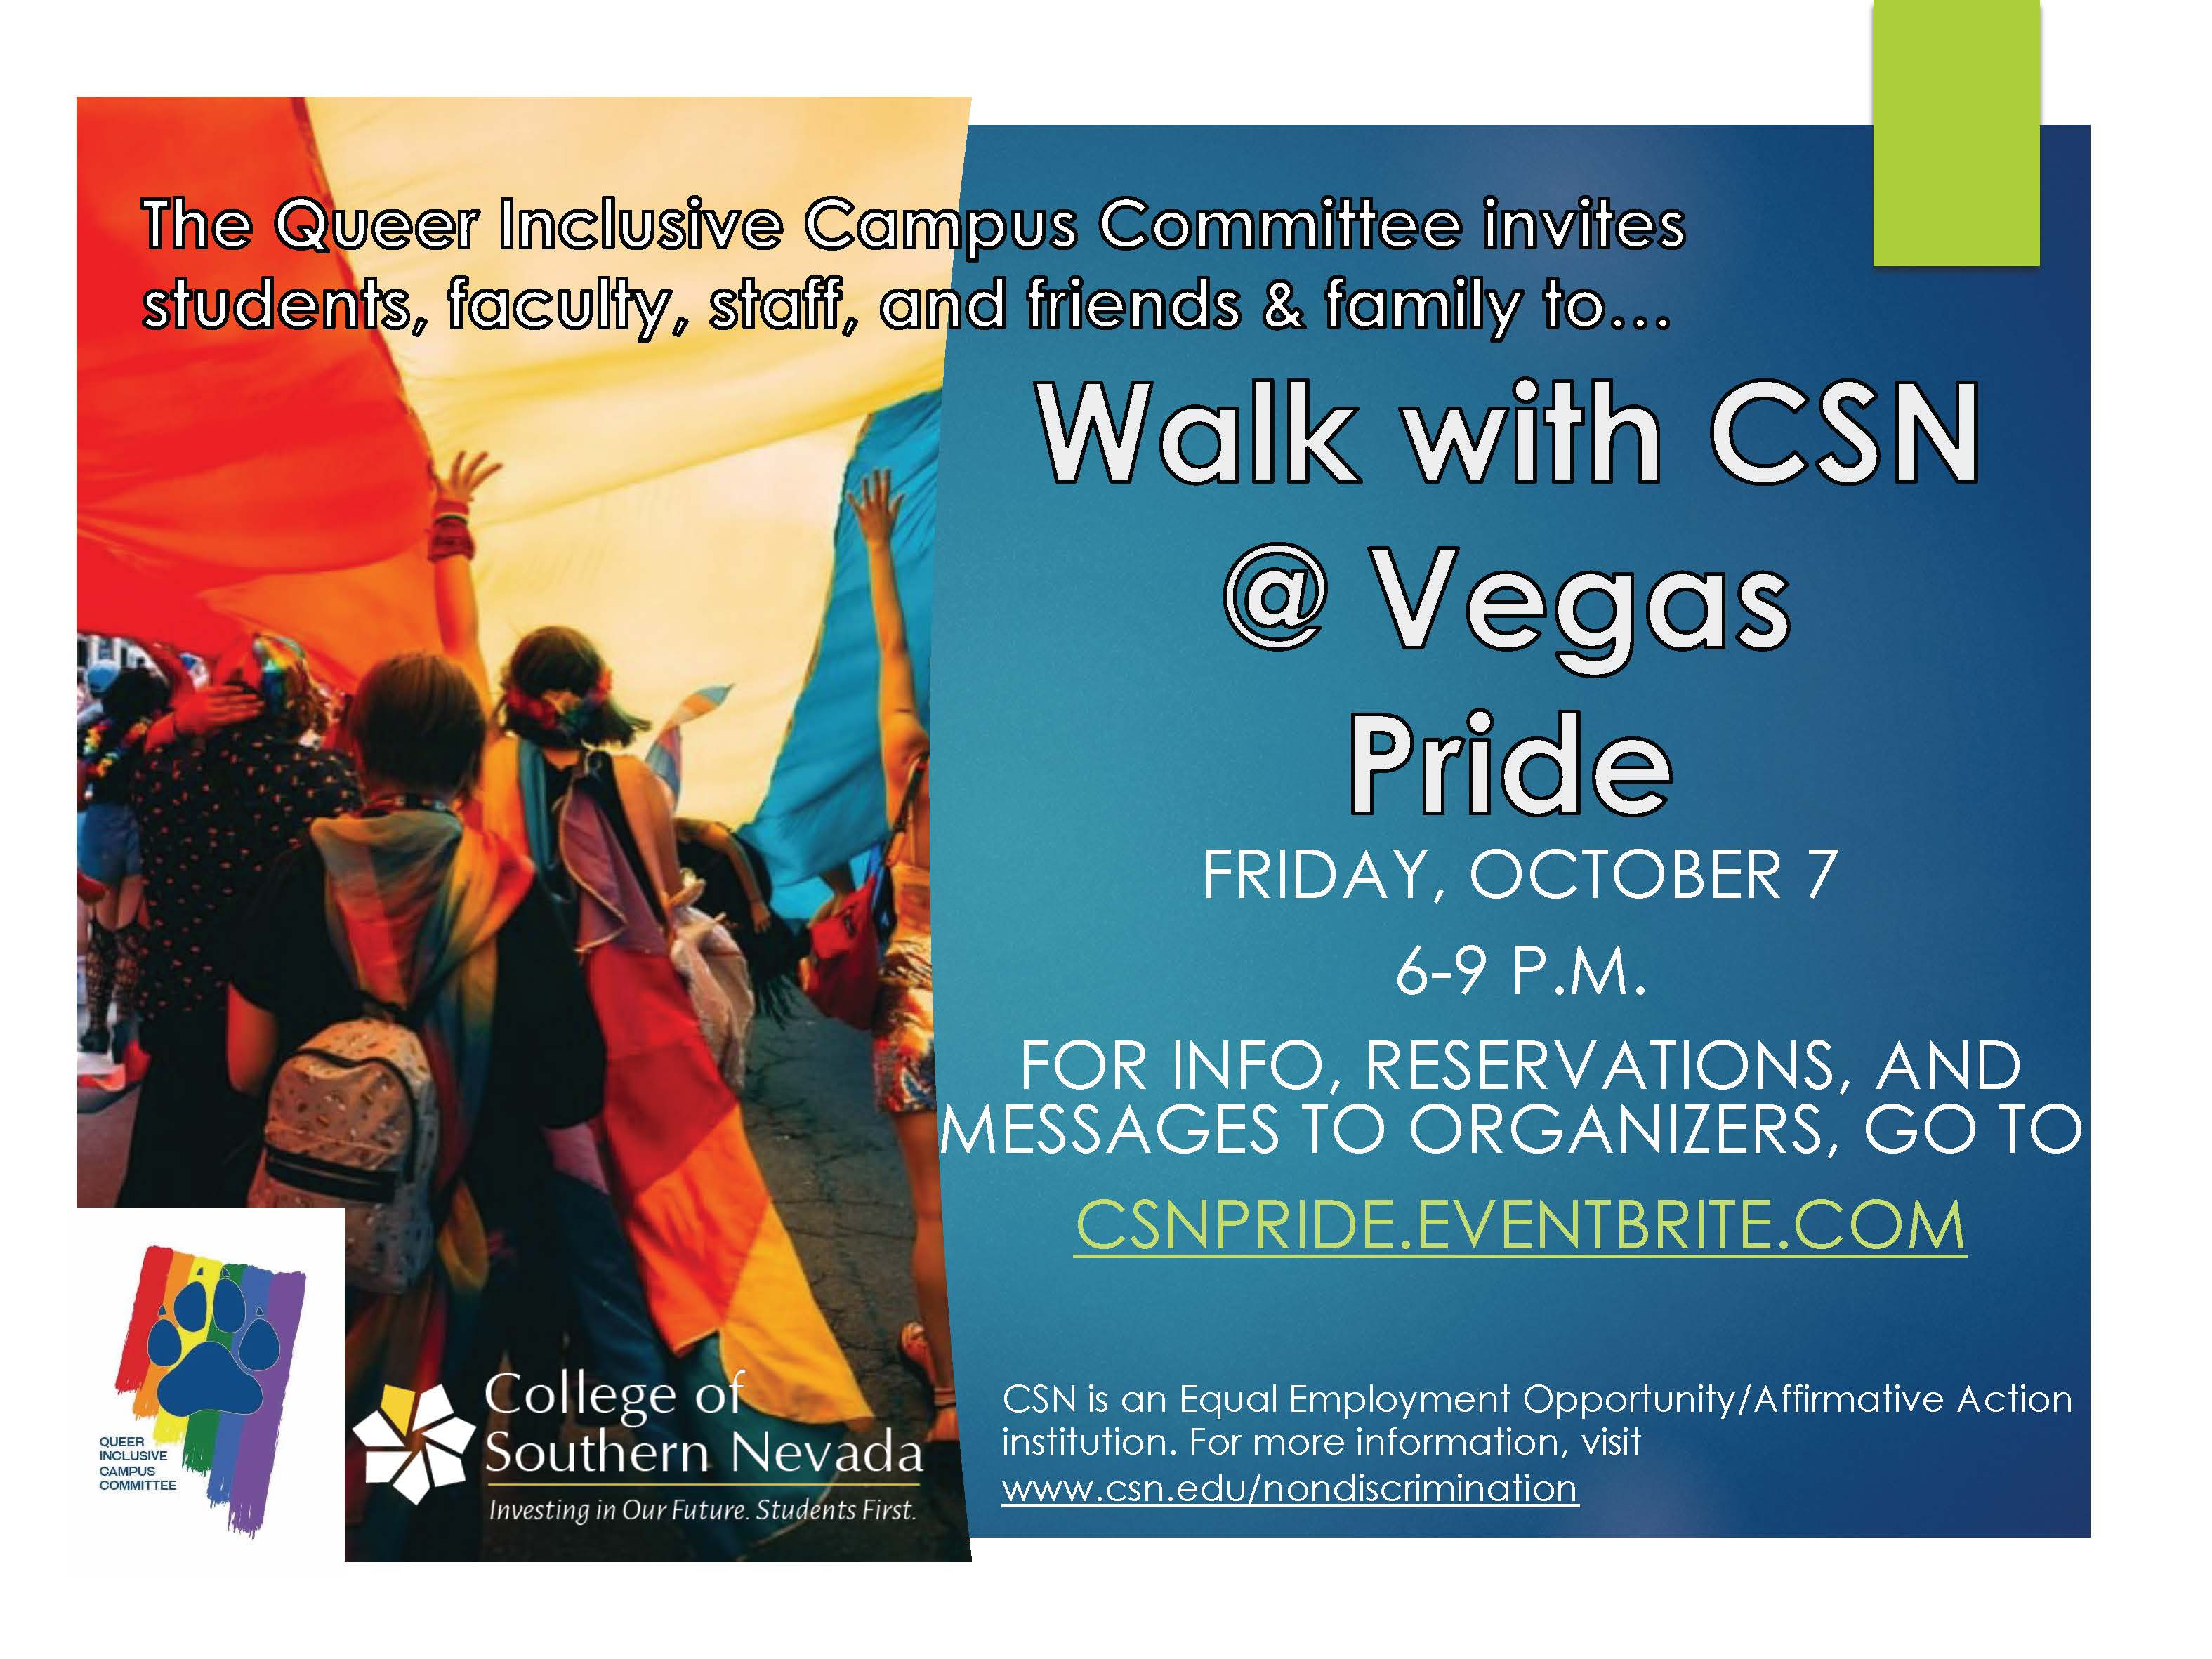 CSN at Vegas Pride event flyer